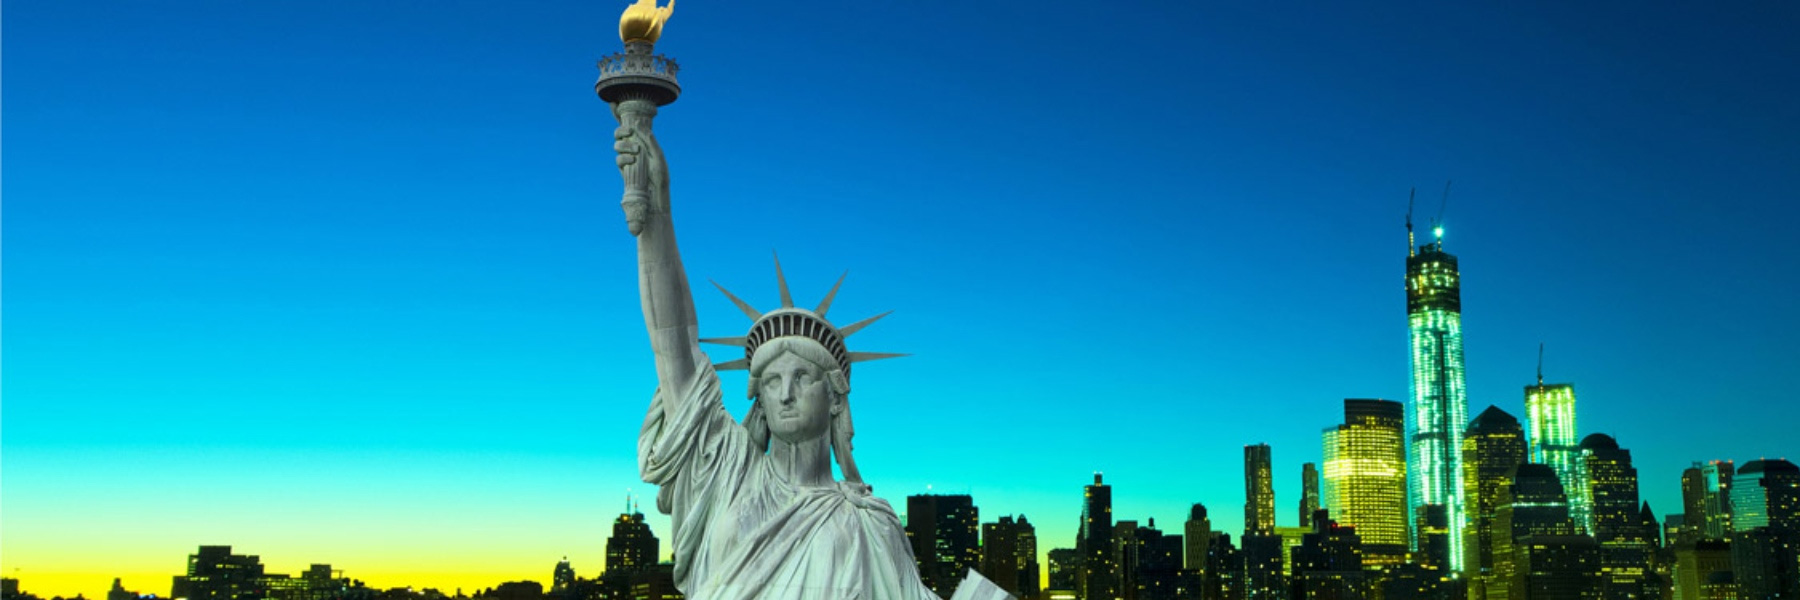 New York statue of liberty light dawn